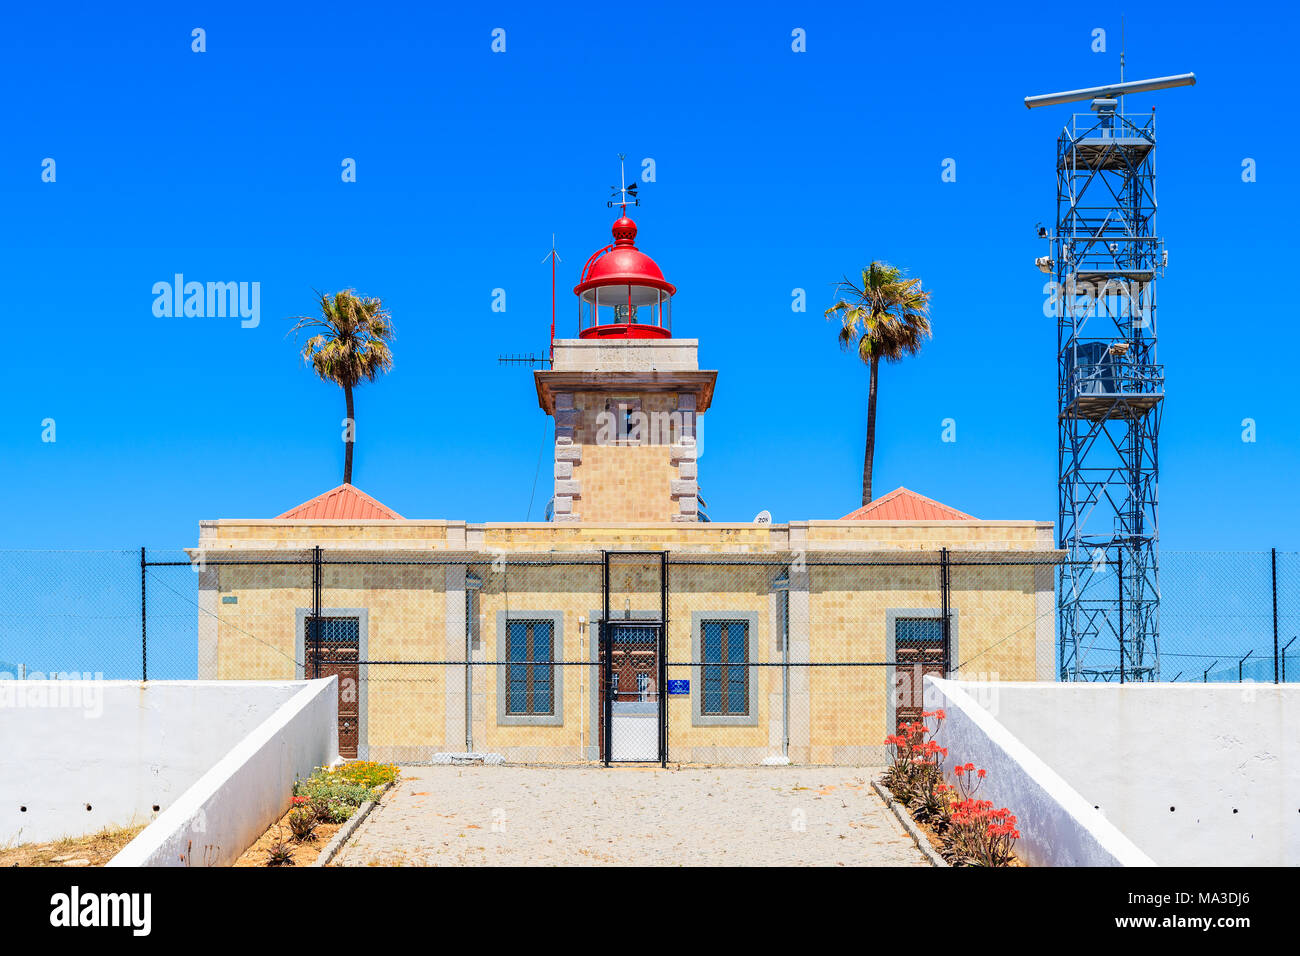 View of lighthouse near Cabo de Sao Vicente on coast of Atlantic Ocean, Algarve region, Portugal Stock Photo